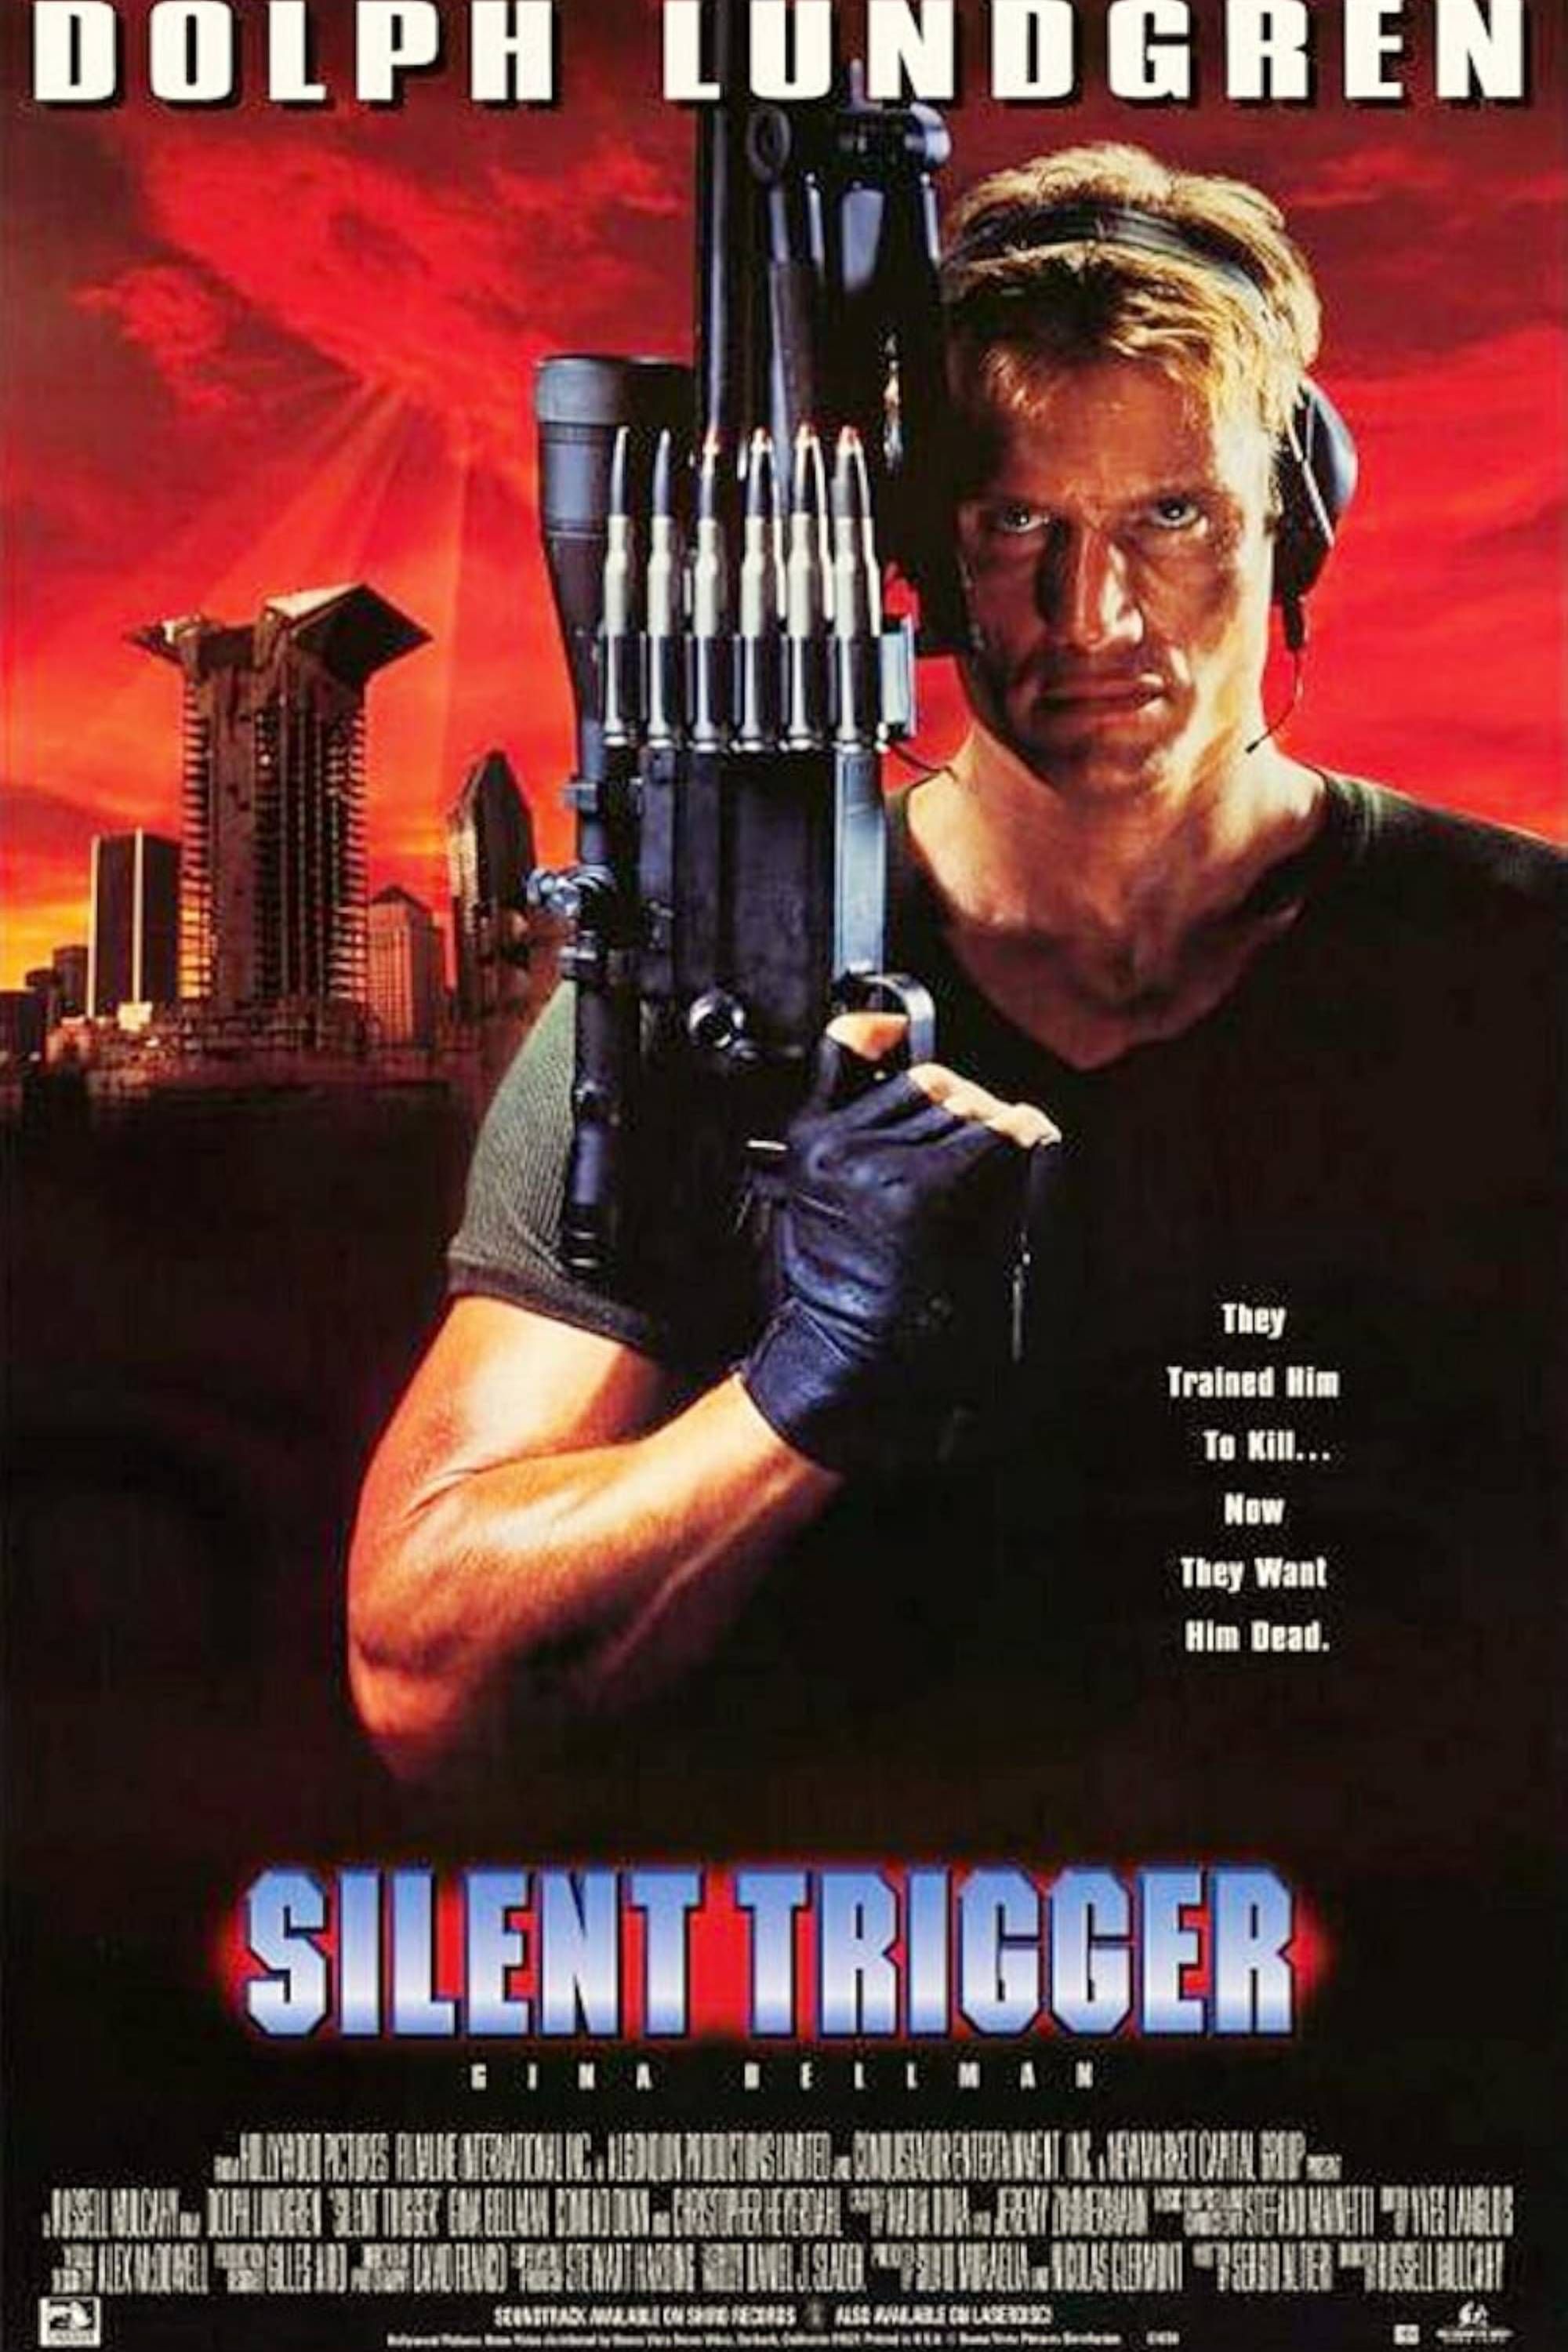 Silent Trigger (1996) - Pôster - Dolph Lundgren com metralhadora